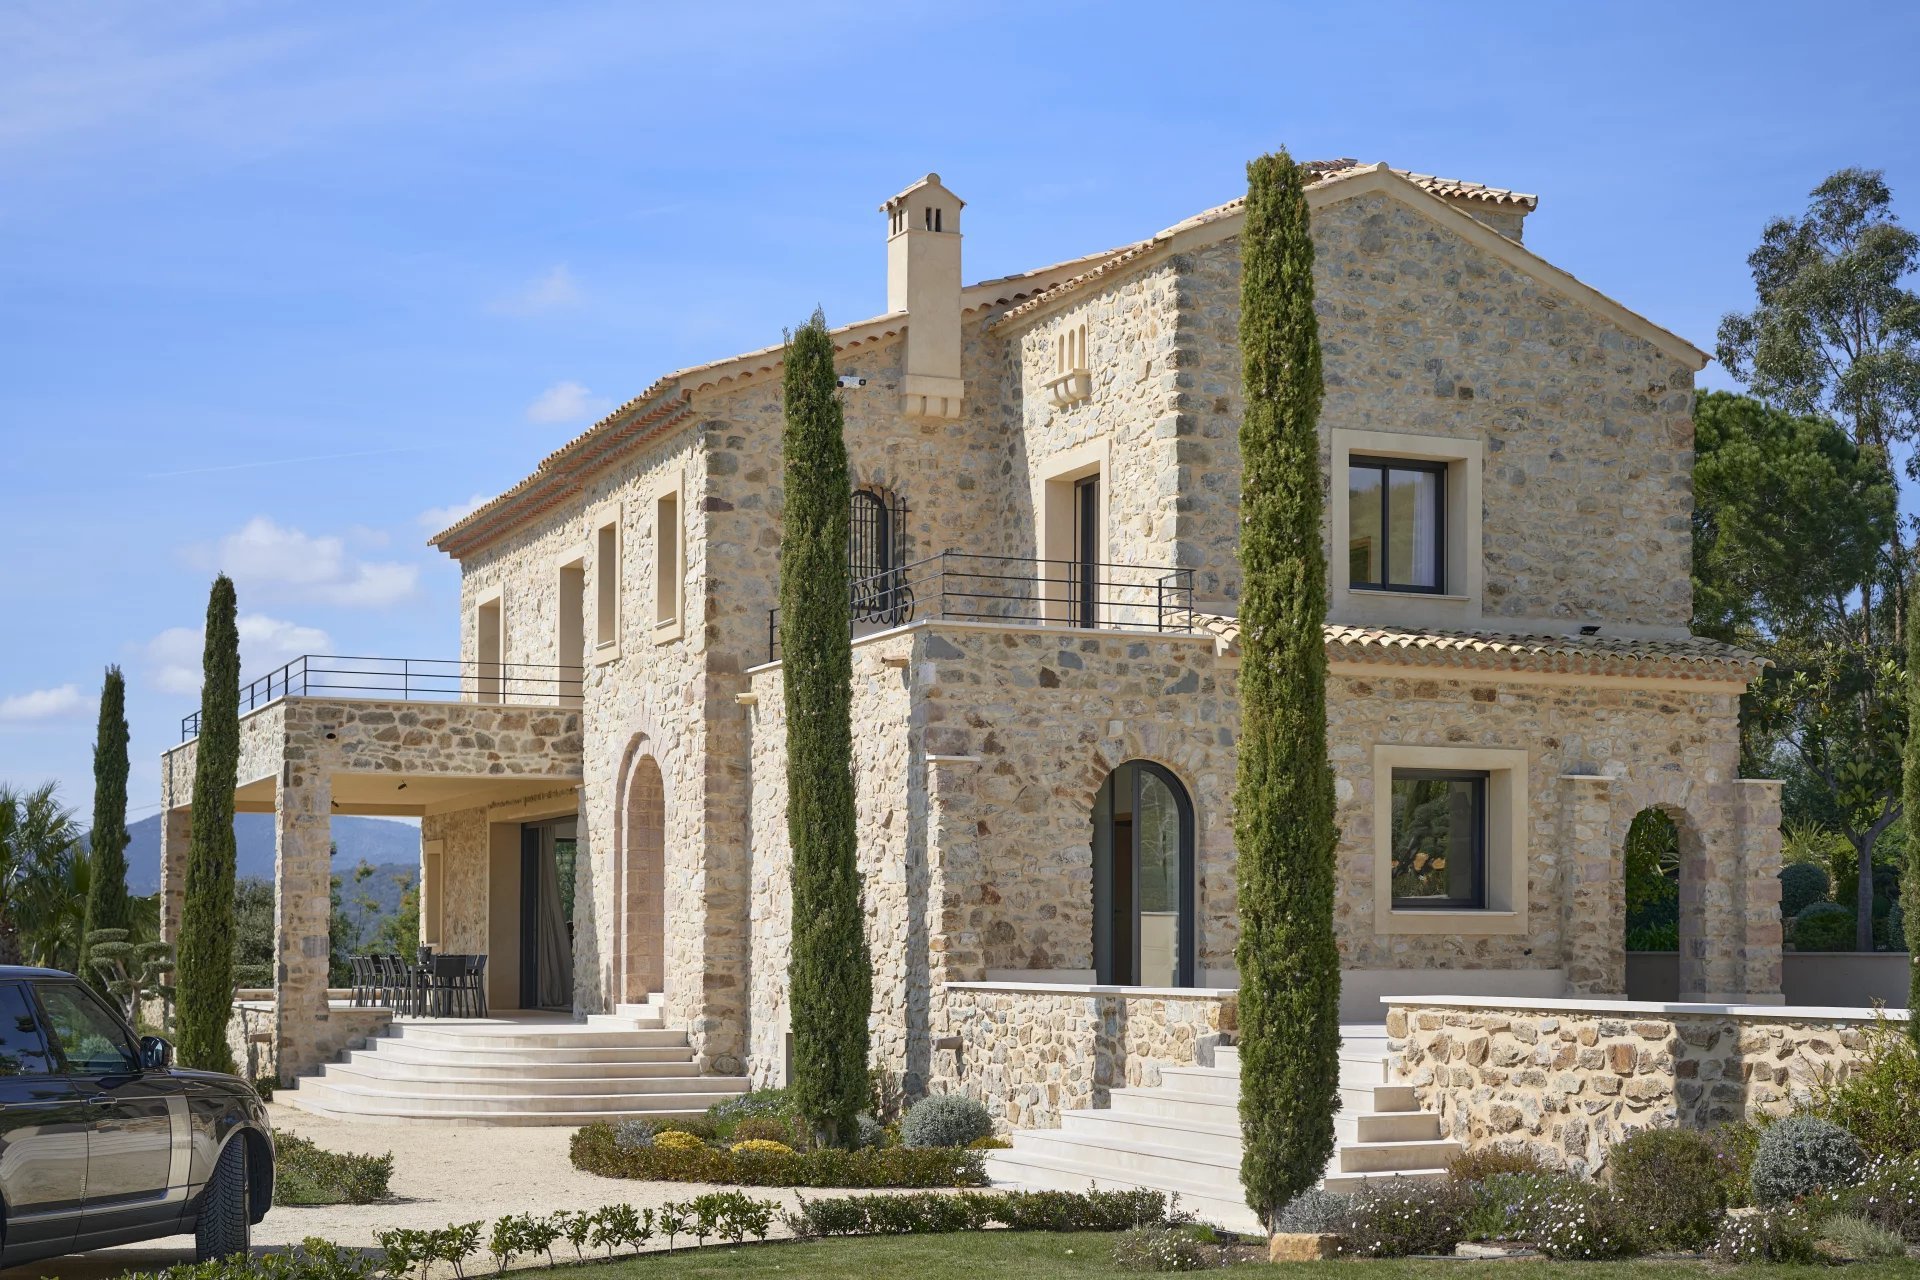 Francis York Luxury Villa Overlooking the Bay of Saint Tropez, French Riviera 3.jpg